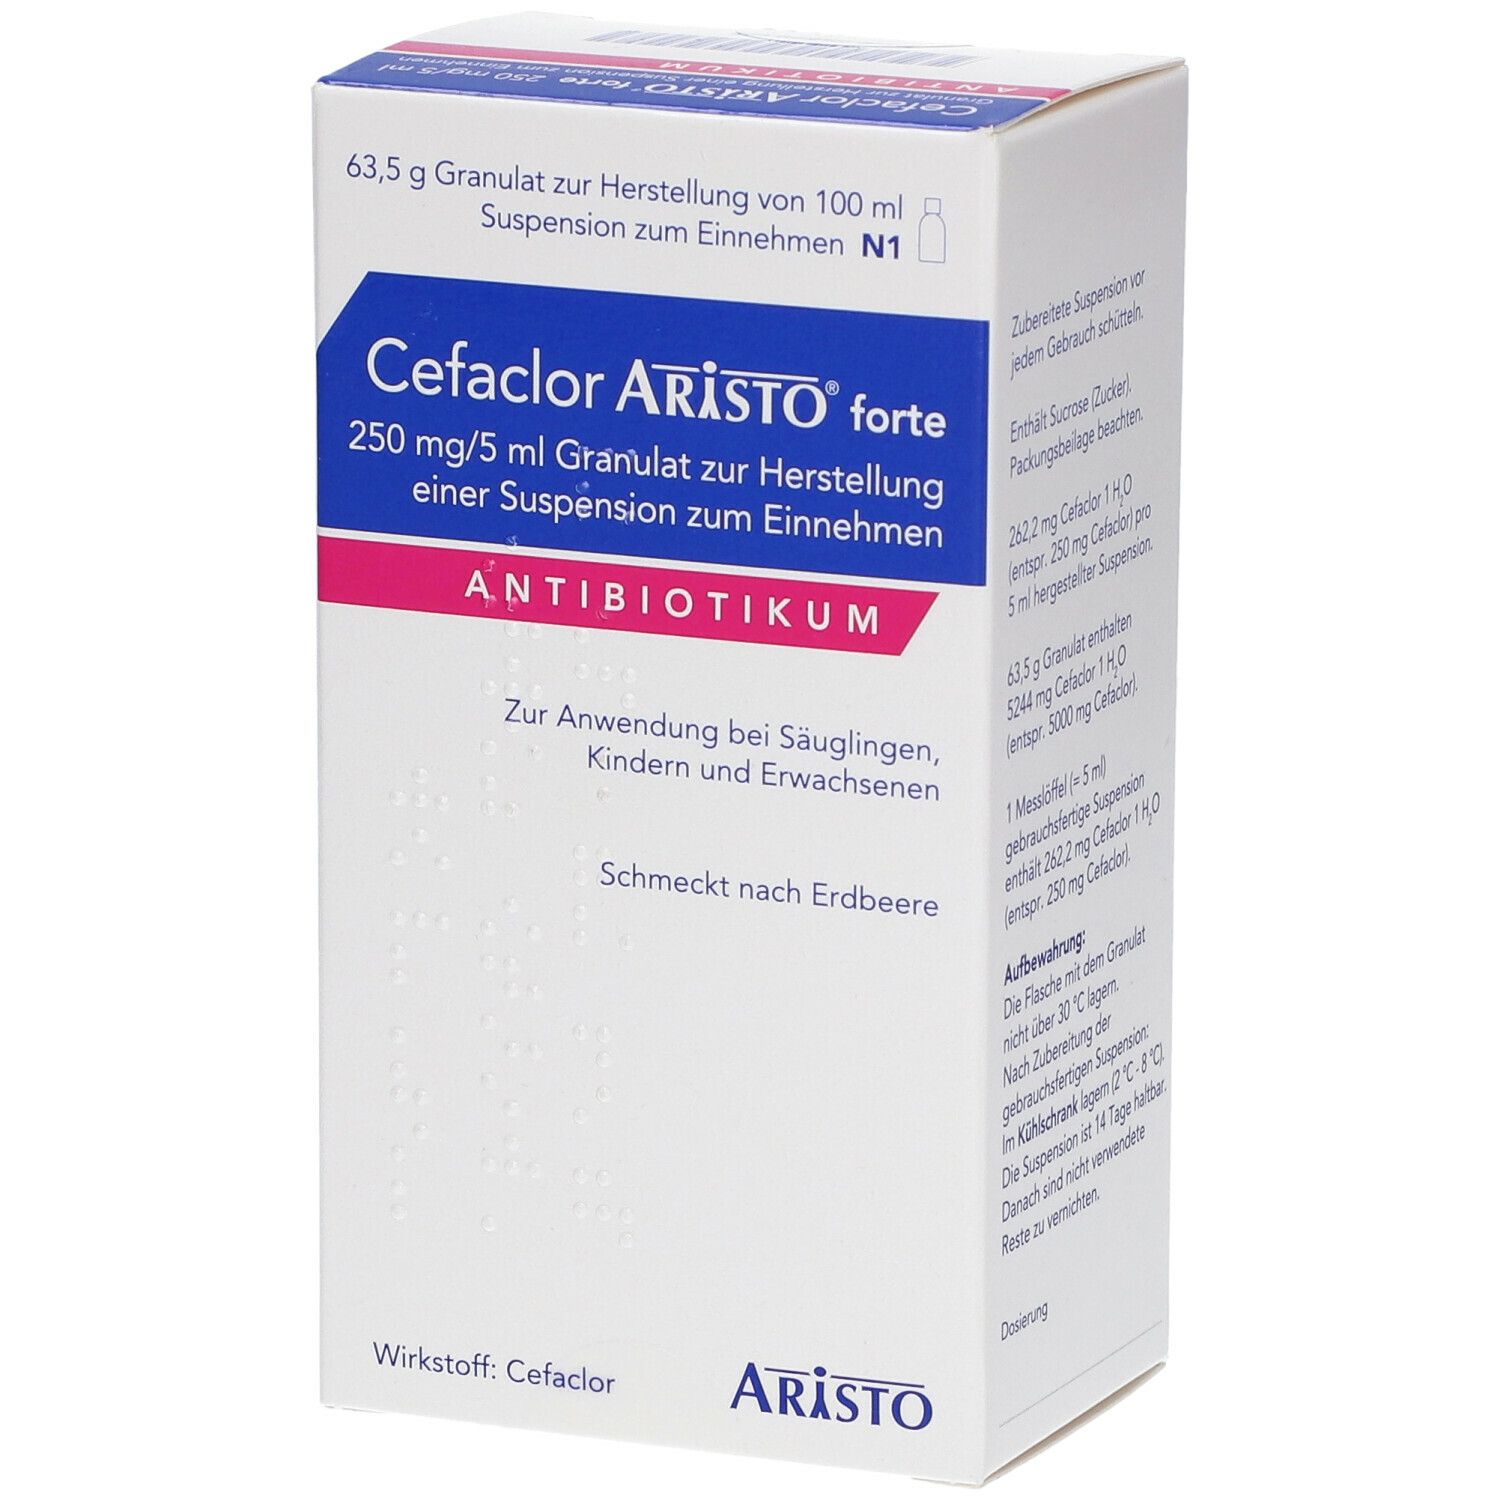 Cefaclor Aristo® forte 250 mg/5 ml